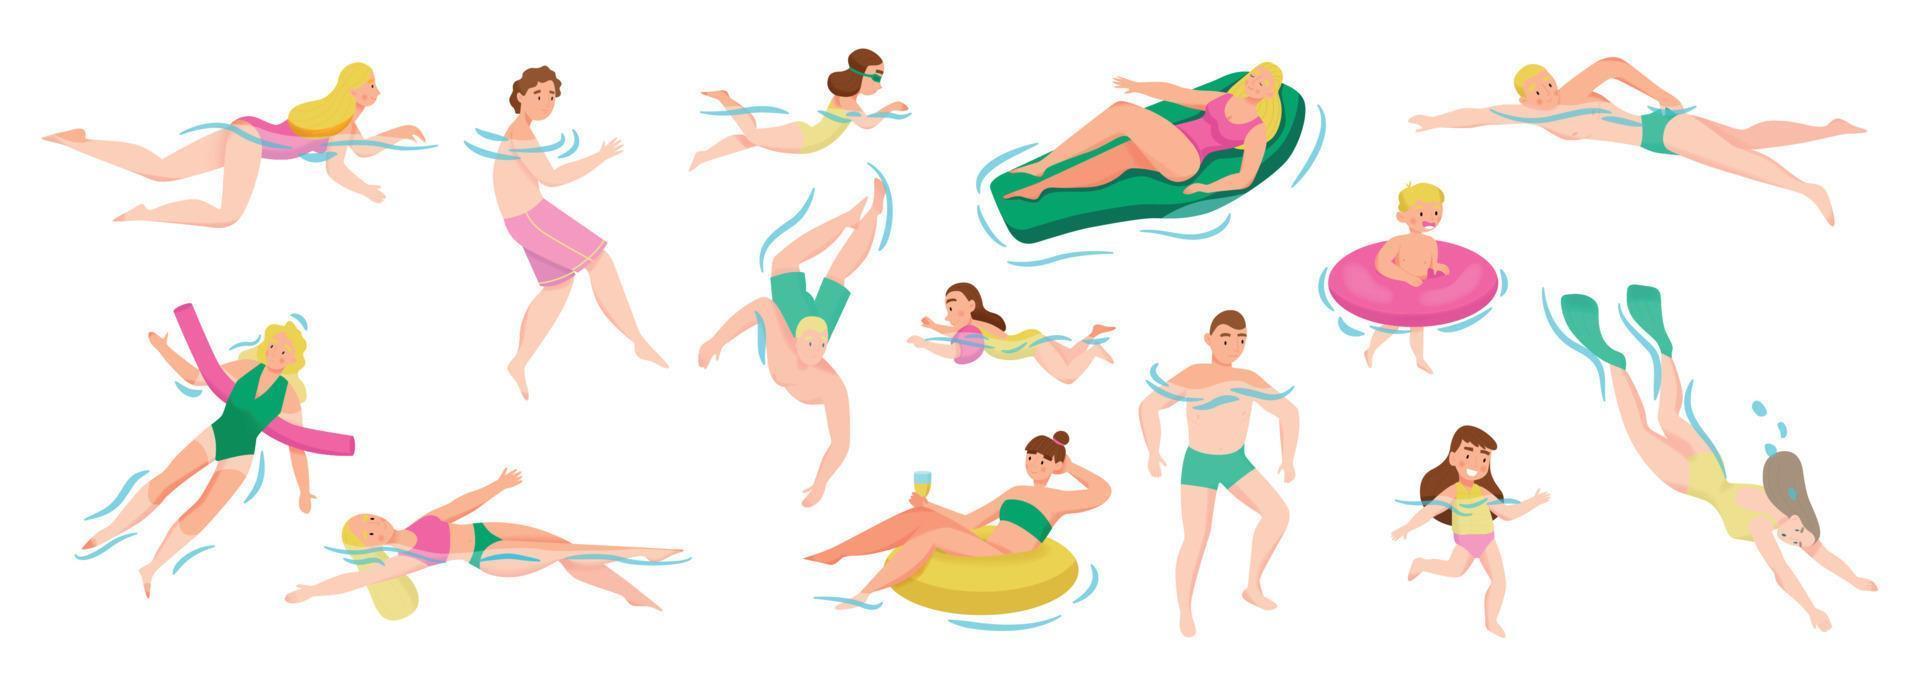 jeu d'icônes de personnes de maillots de bain de natation vecteur